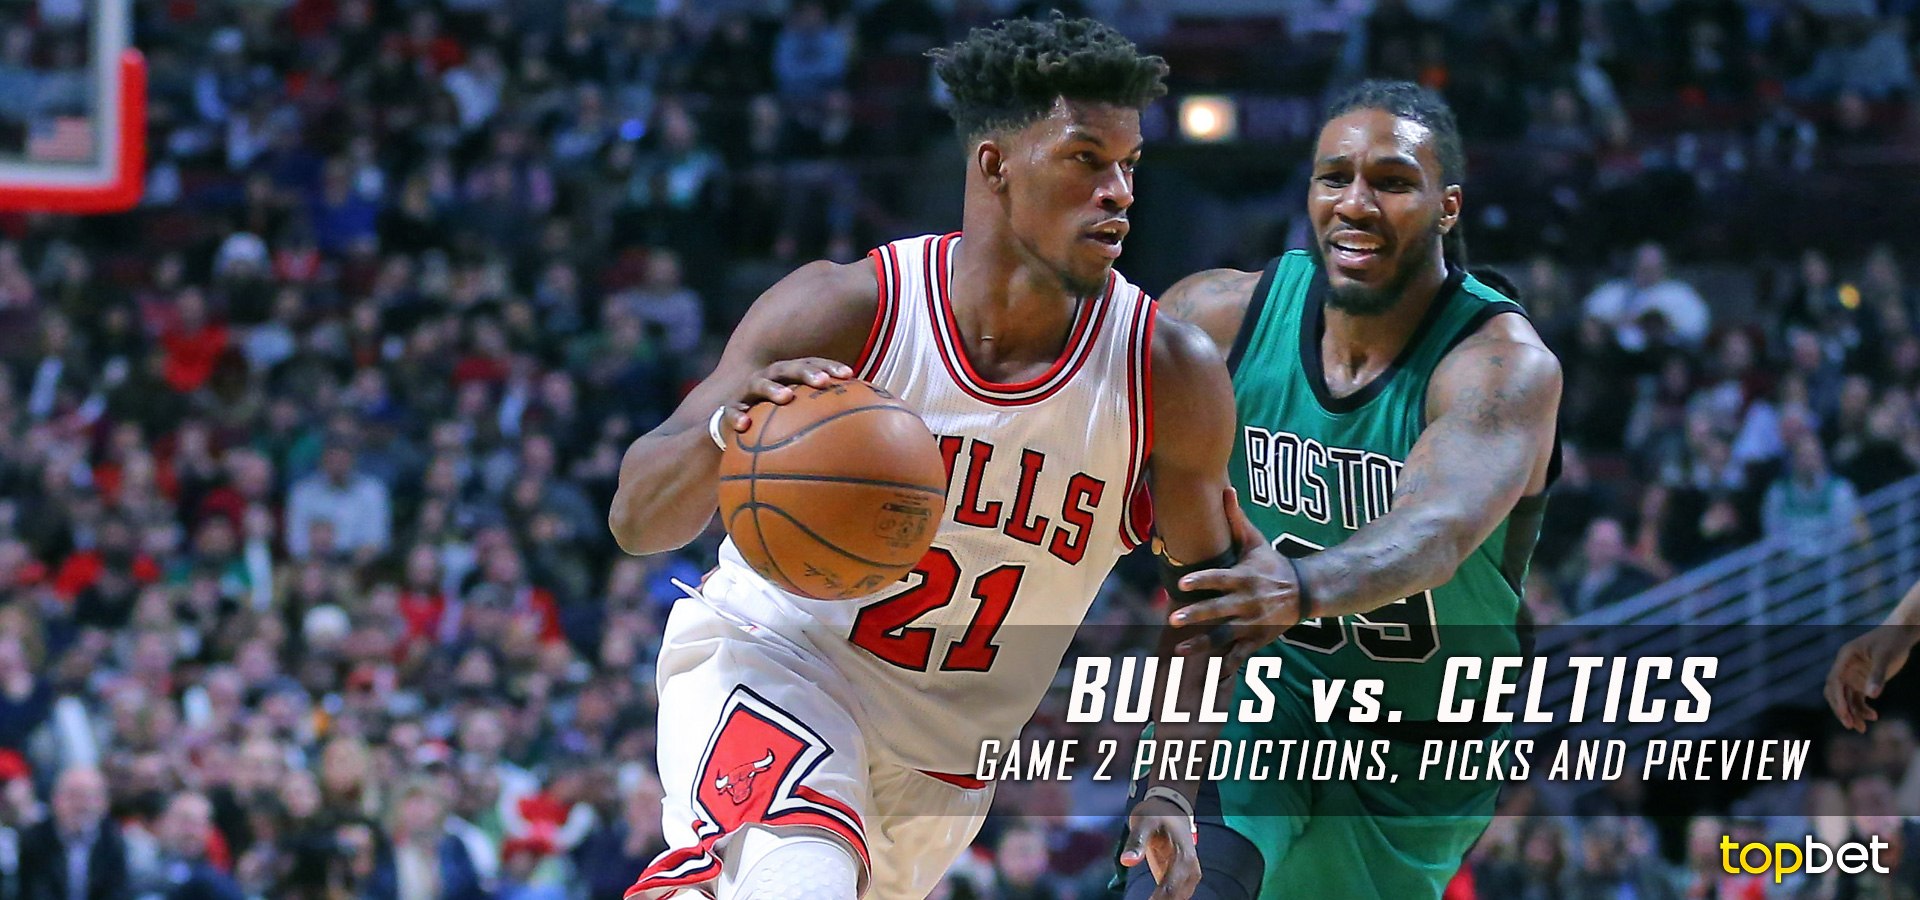 Bulls vs Celtics Series Game 2 Predictions, Picks & Preview1920 x 900